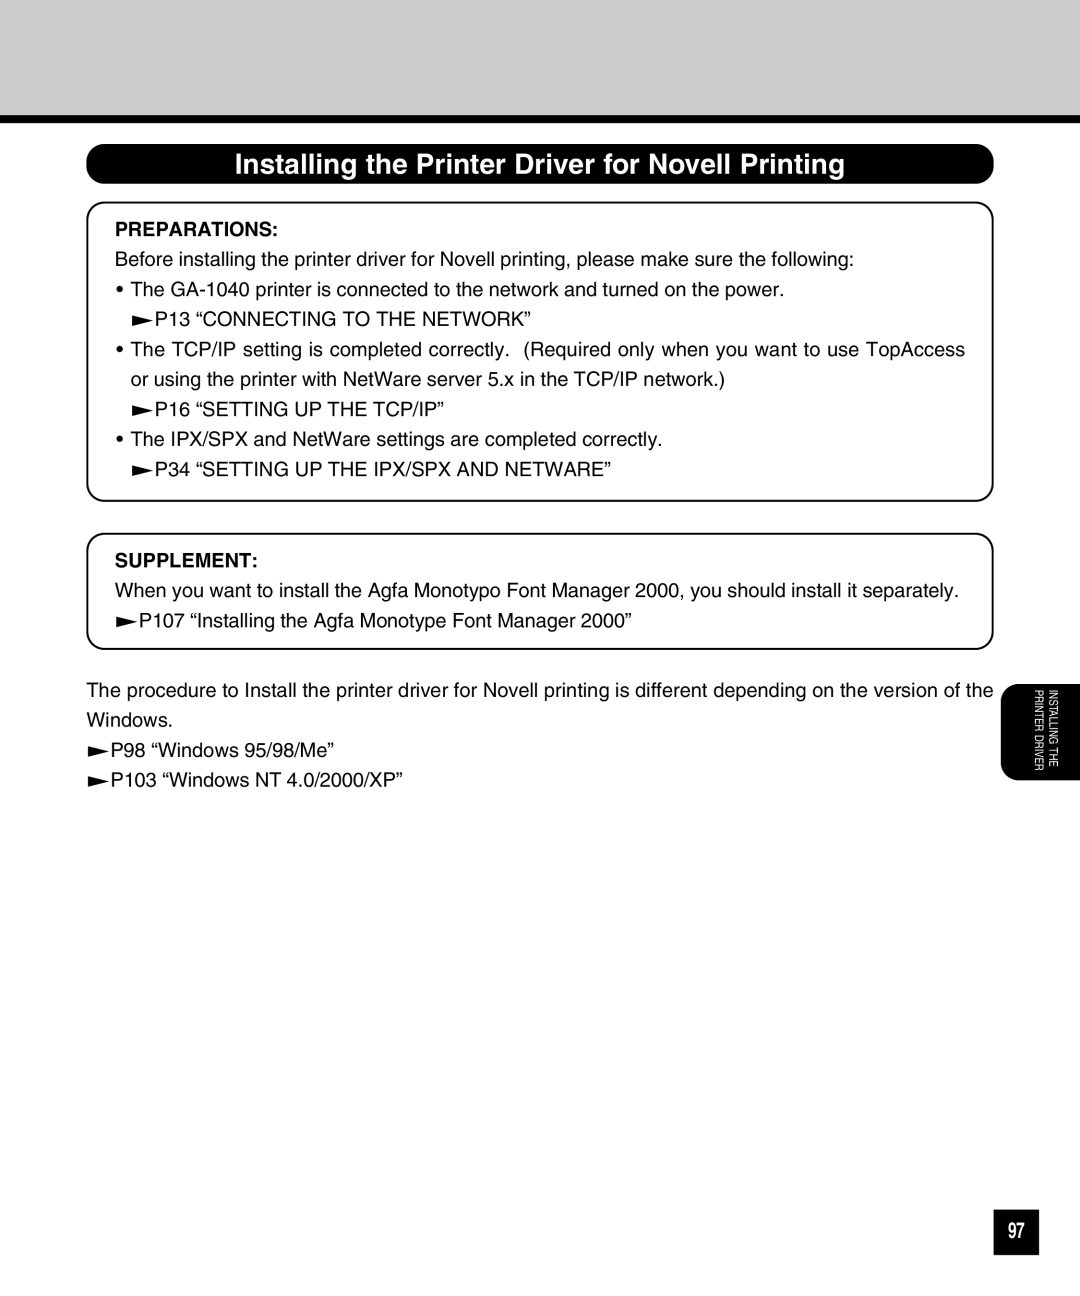 Toshiba GA-1040 manual Installing the Printer Driver for Novell Printing, Preparations, Supplement 